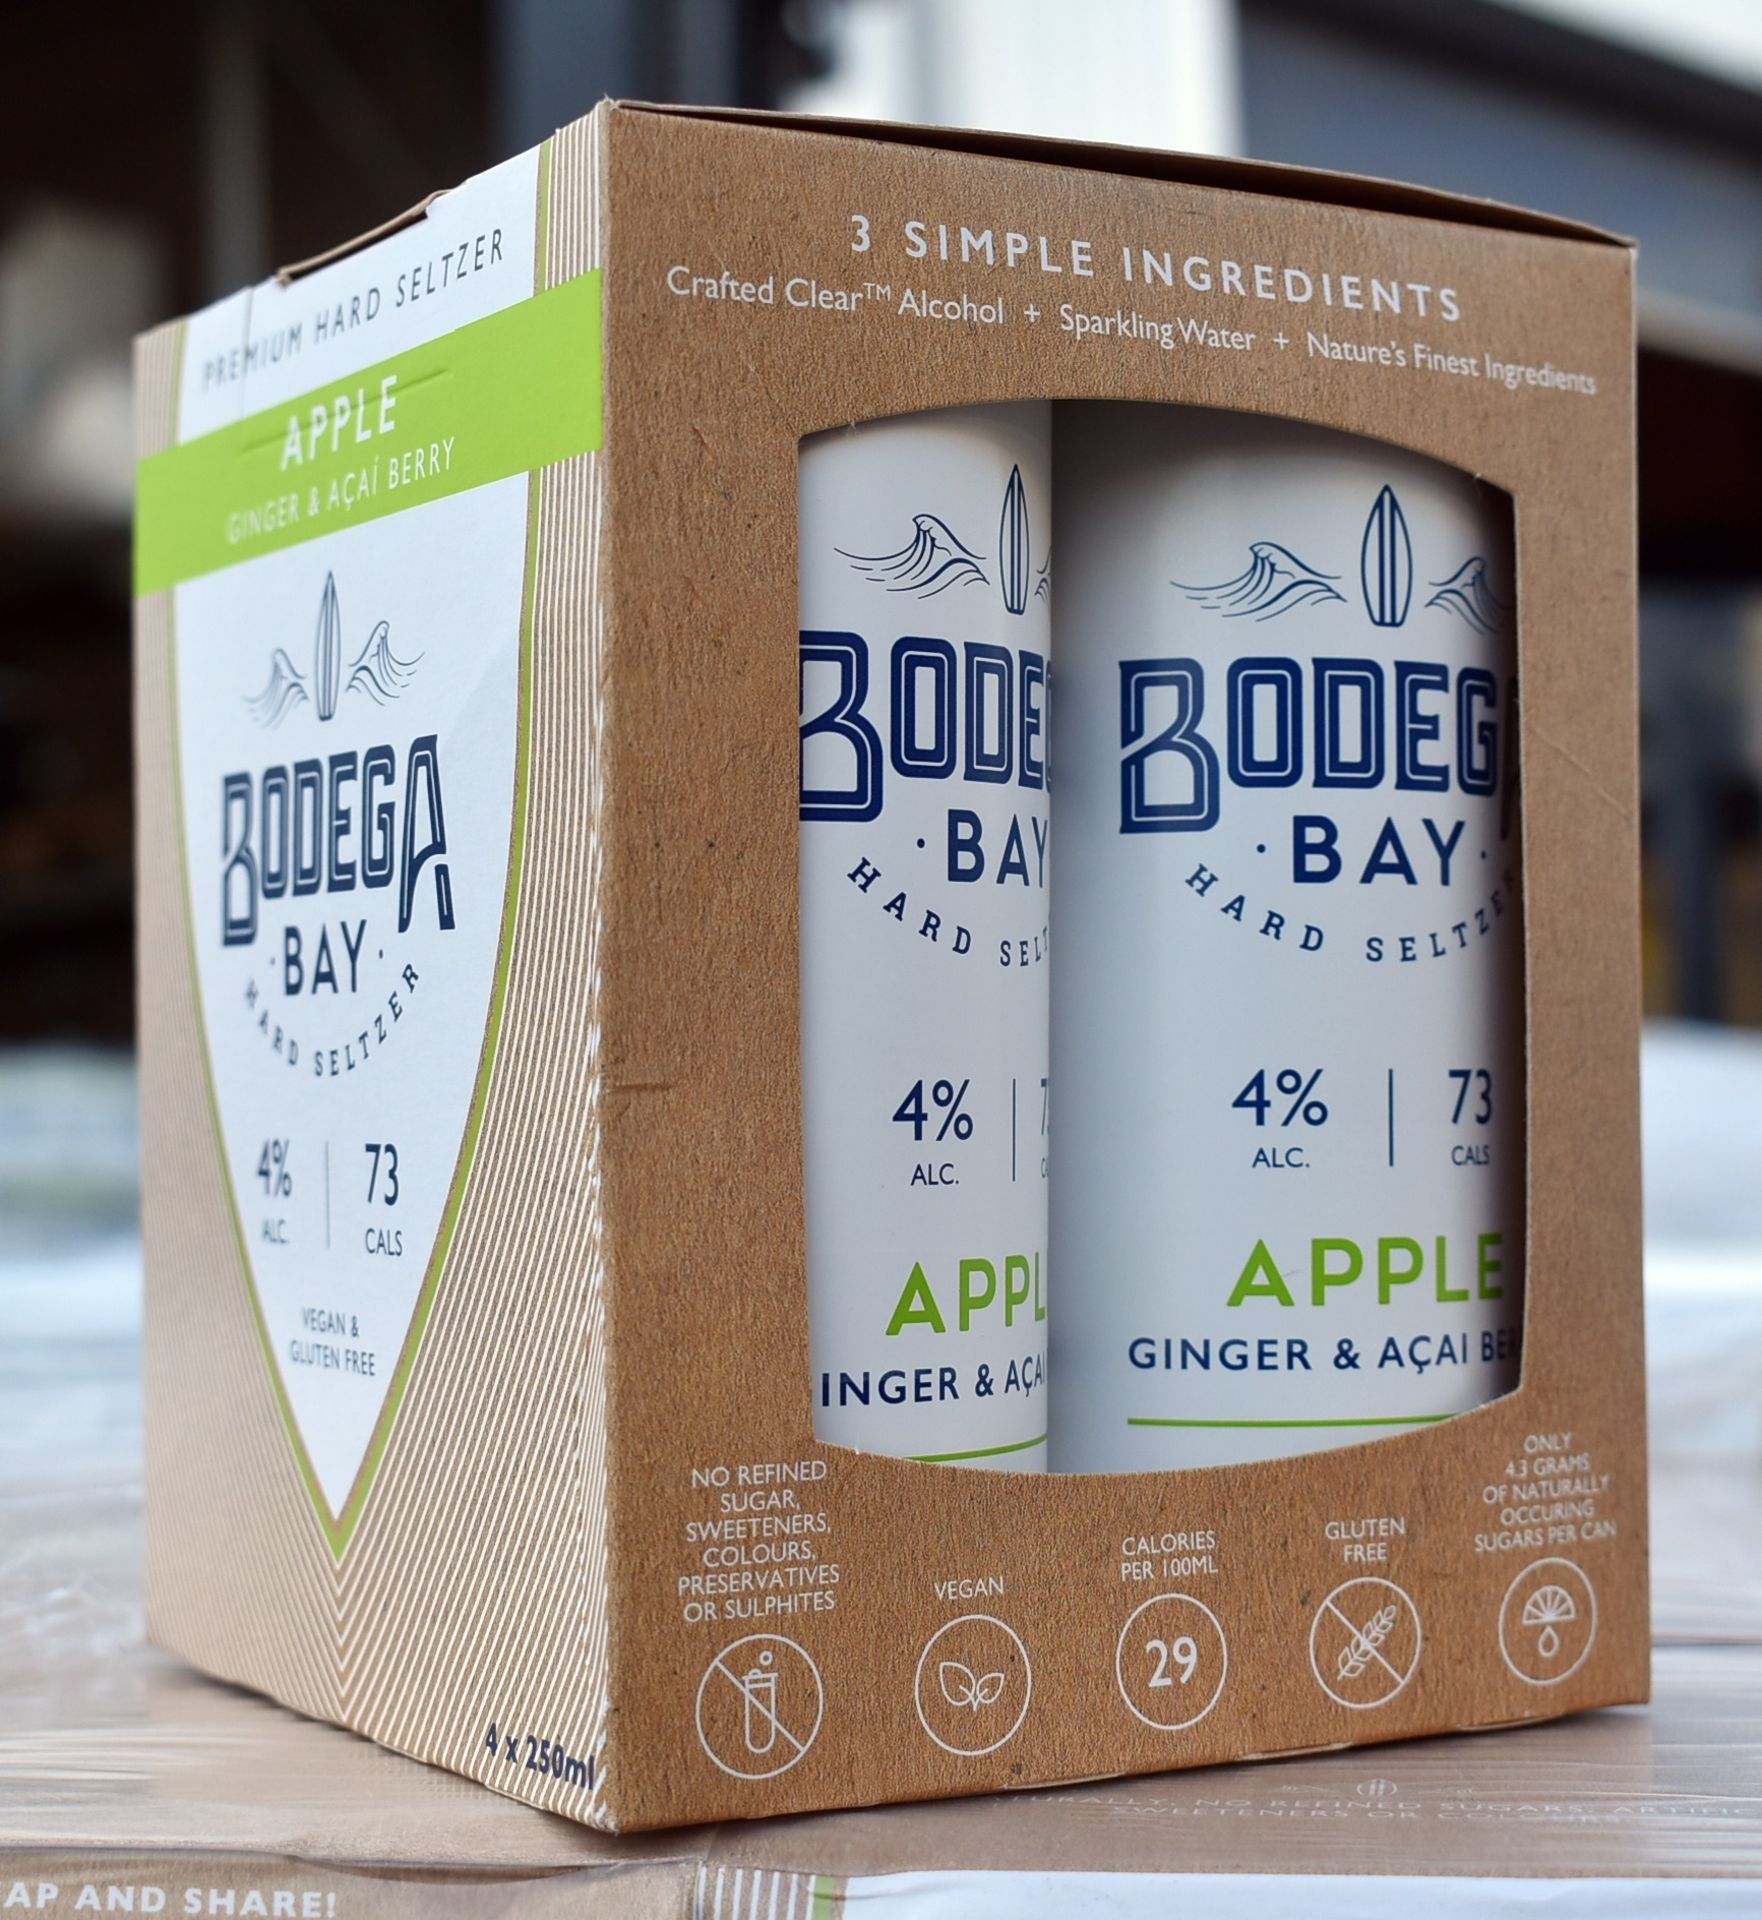 24 x Bodega Bay Hard Seltzer 250ml Alcoholic Sparkling Water Drinks - Apple Ginger & Acai Berry - Image 2 of 4